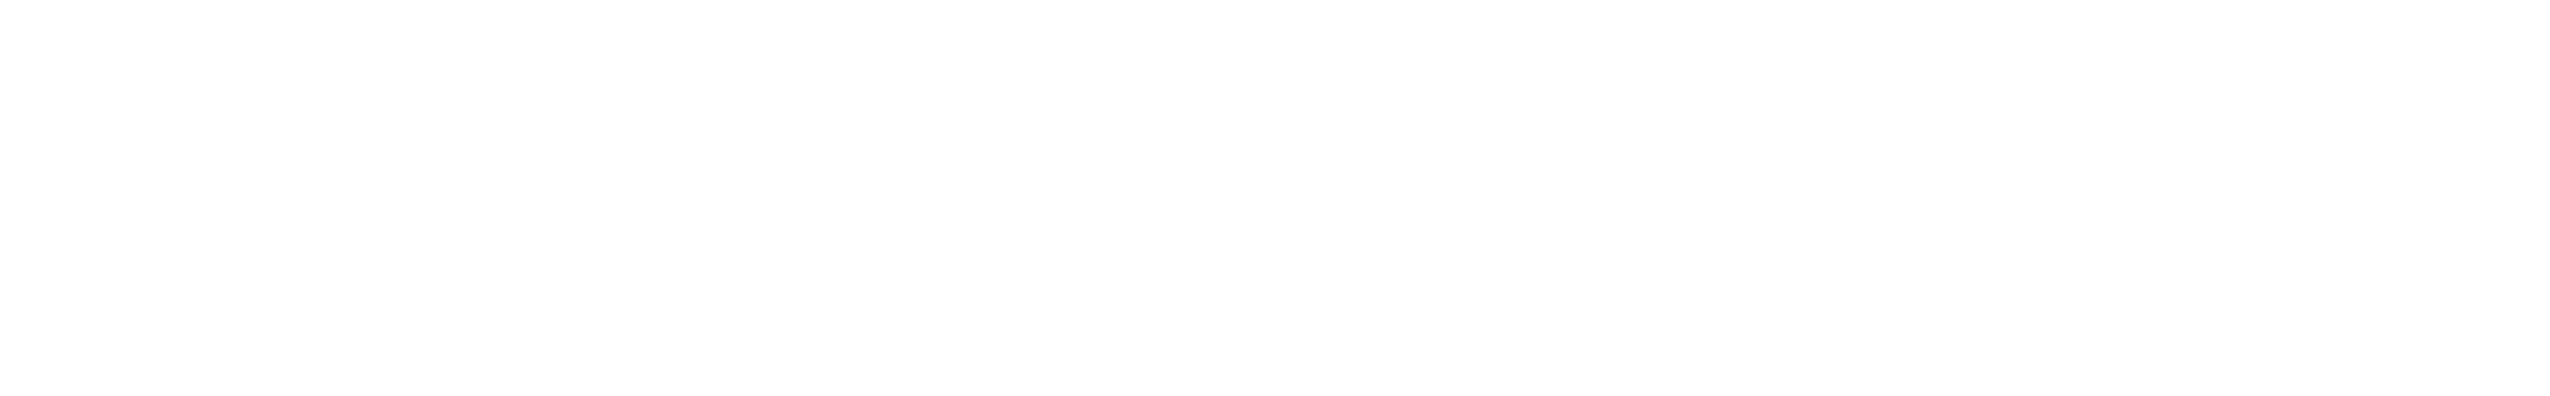 WOB-Transparent-White-Logo-1.png